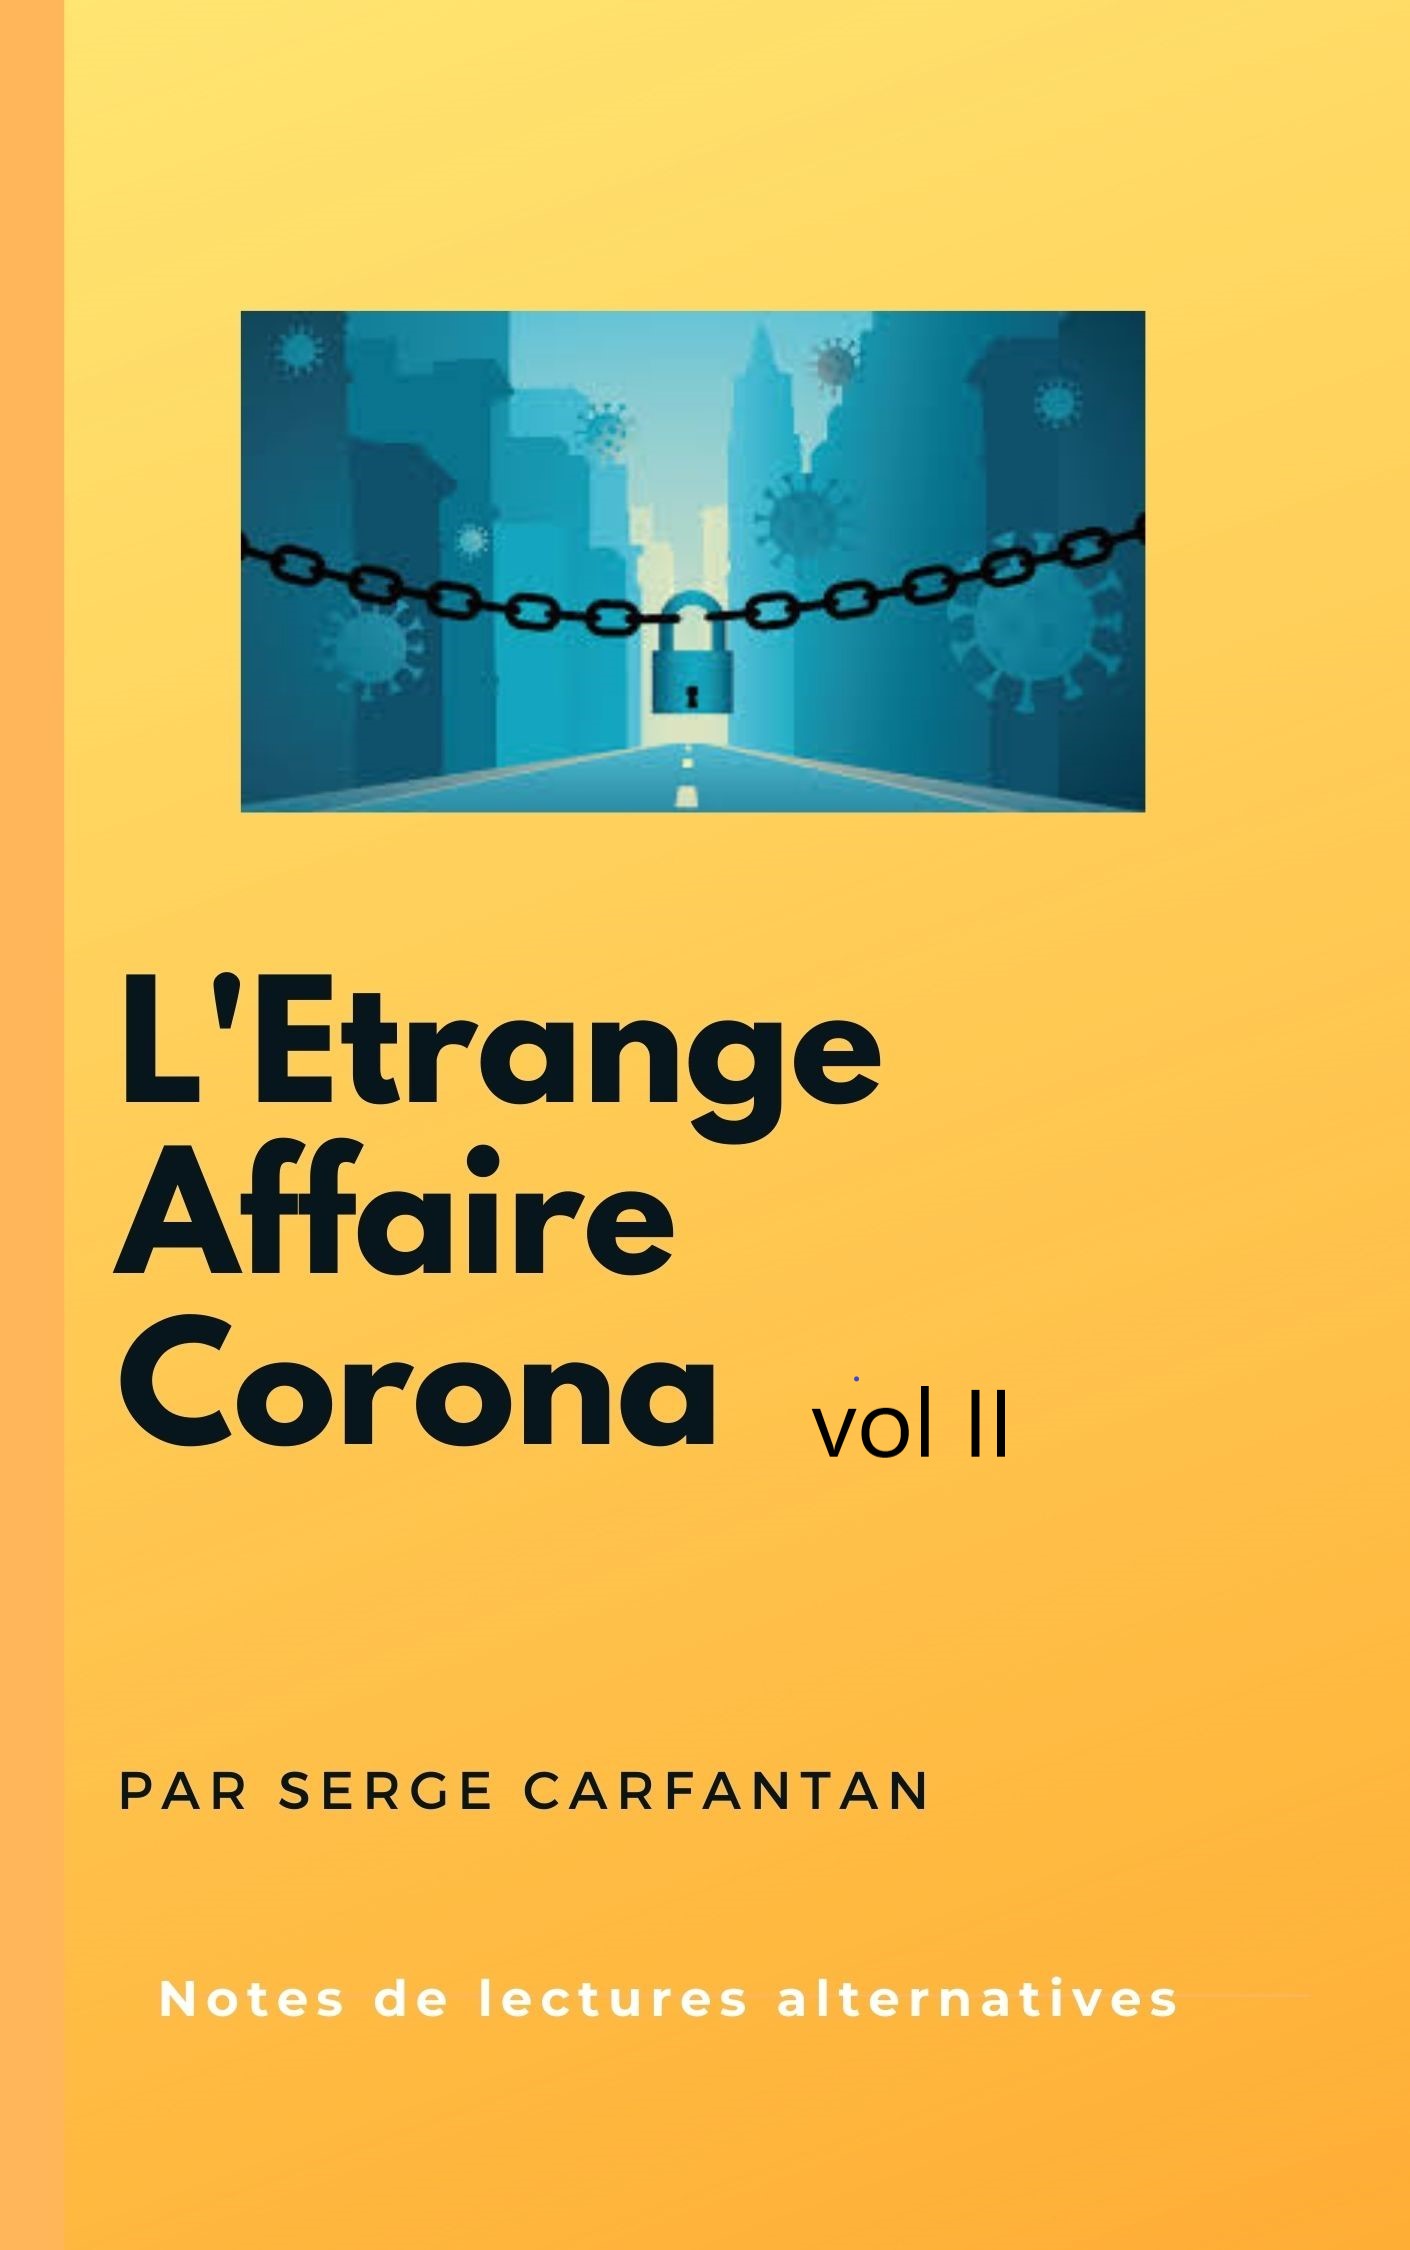 L'Etrange Affaire Corona vol II